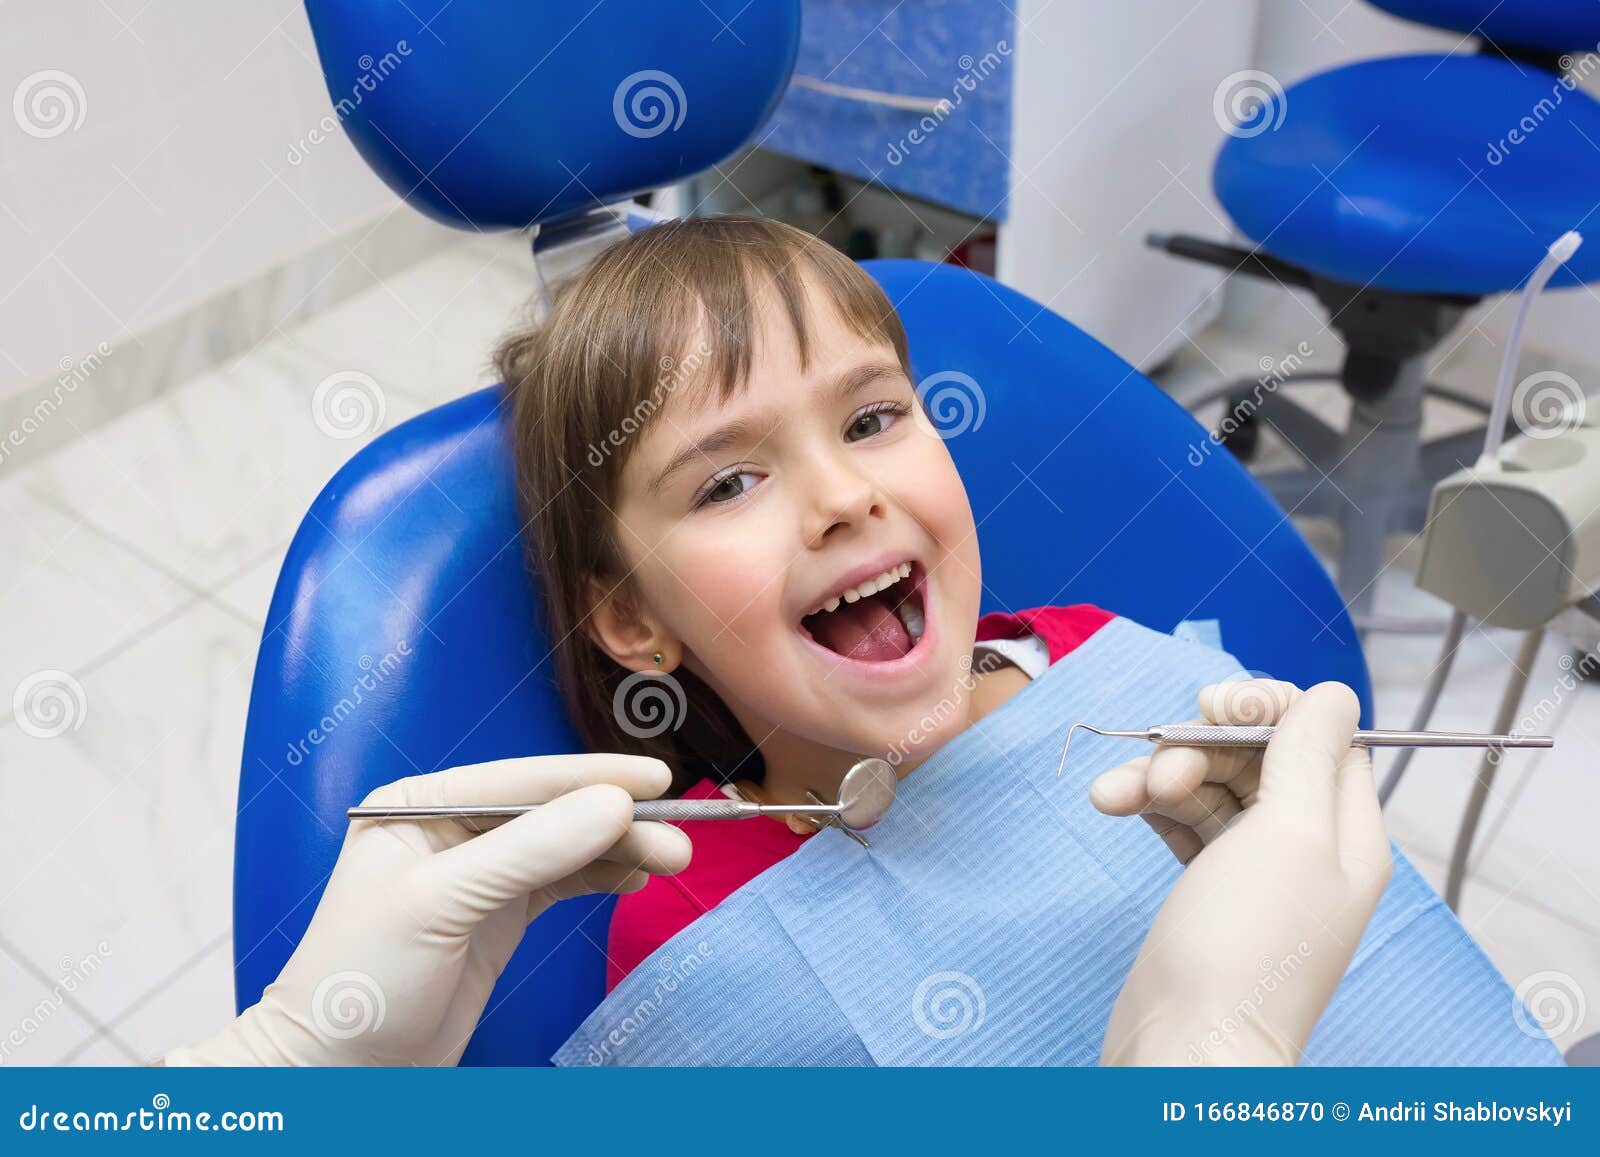 a close-up of a dentistÃ¢â¬â¢s hands and a child with an opened mouth